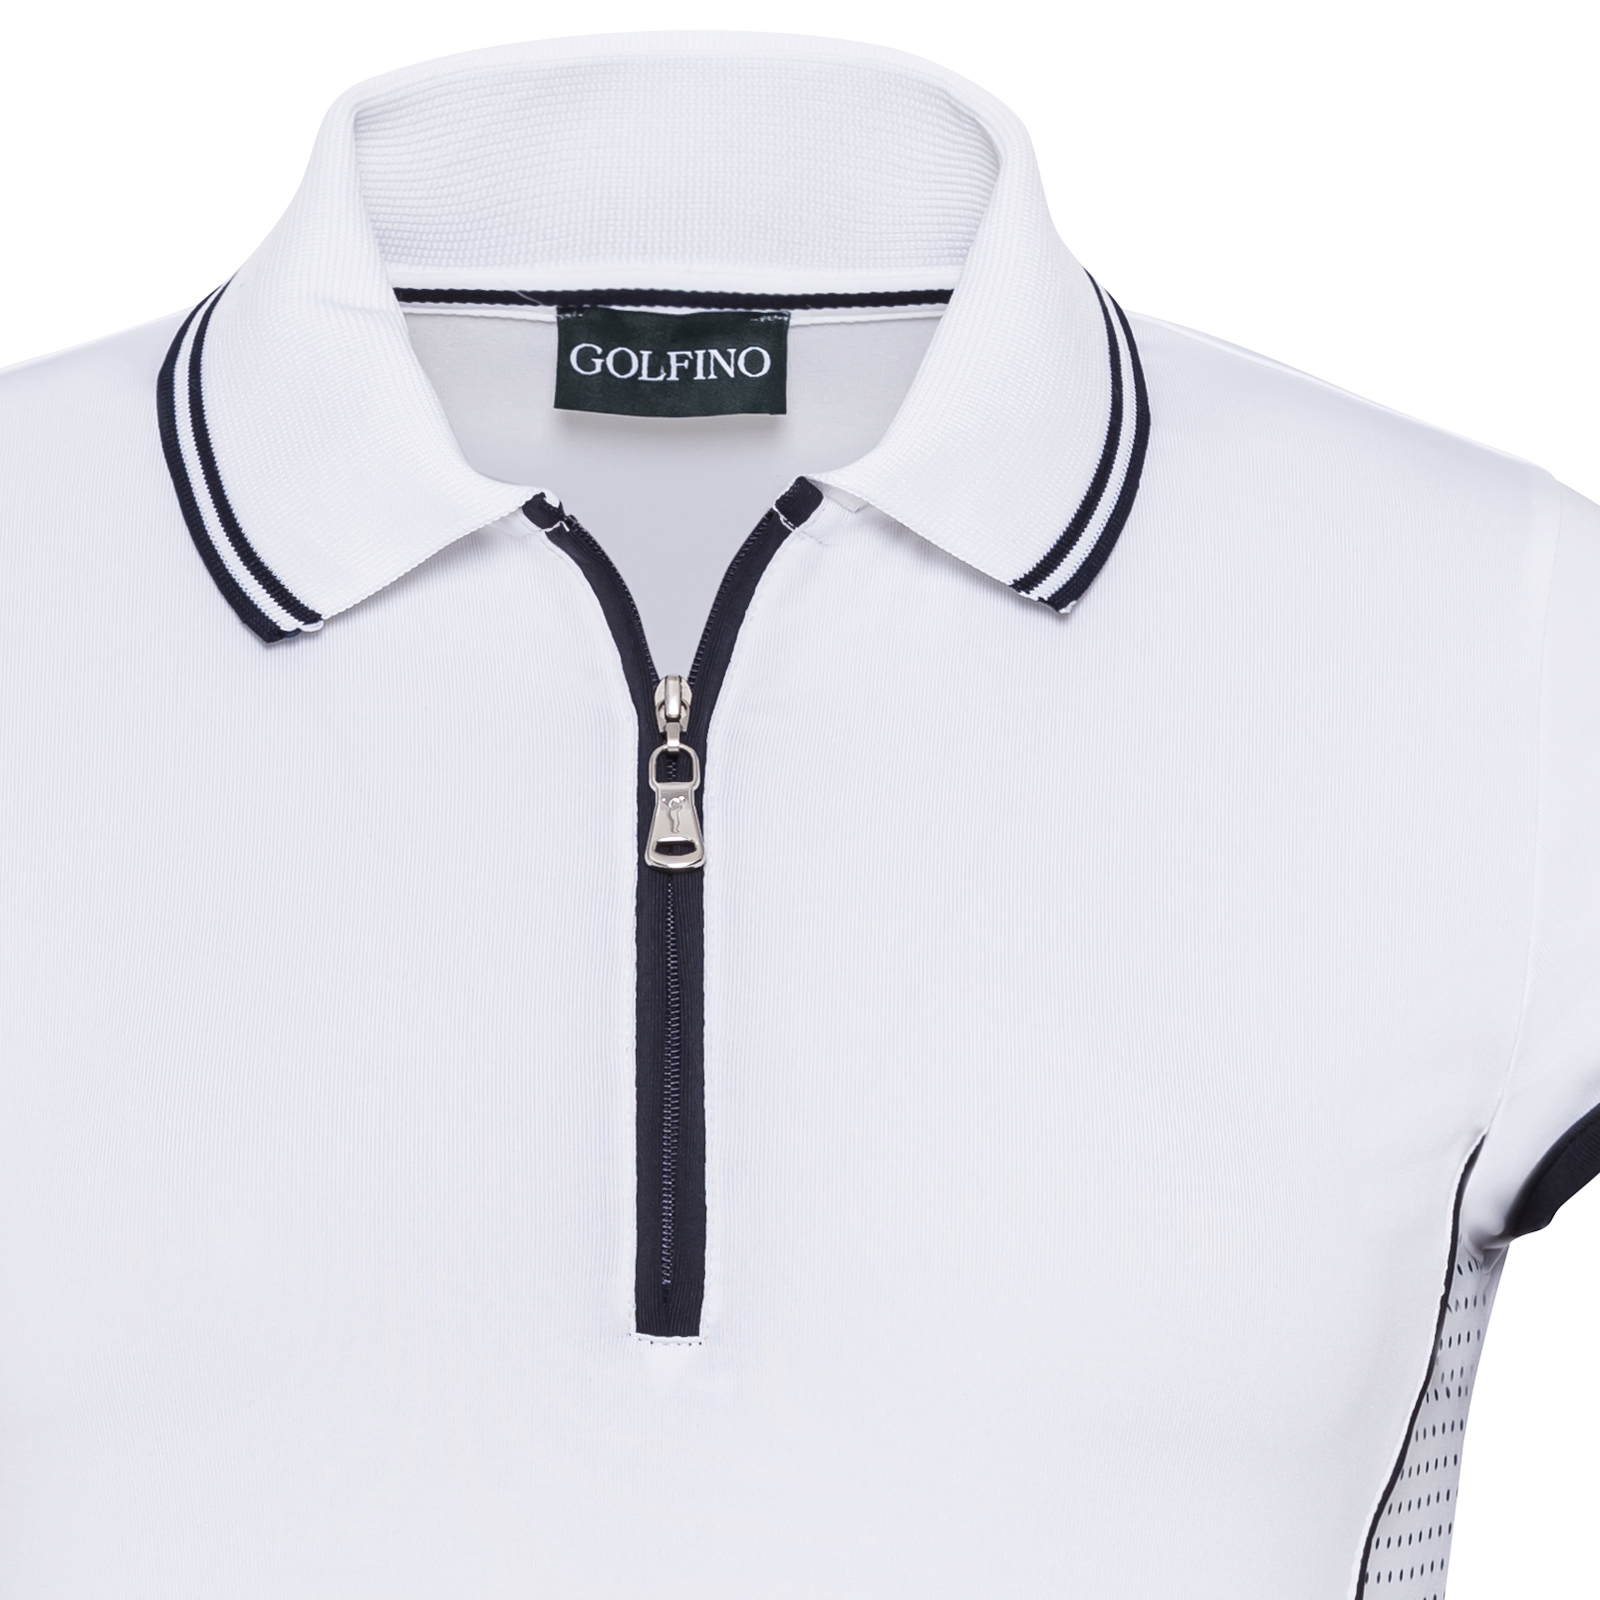 Ladies' modern, figure-flattering golf polo shirt